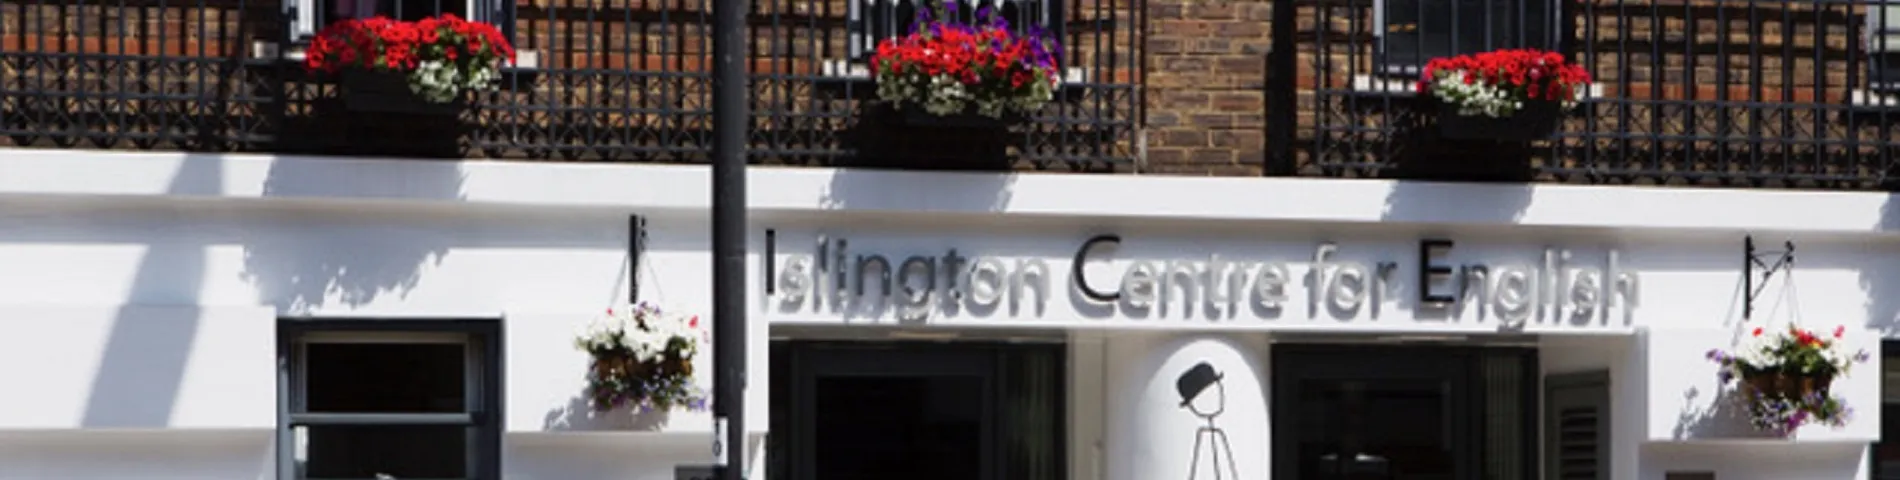 Islington Centre for English obrazek 1